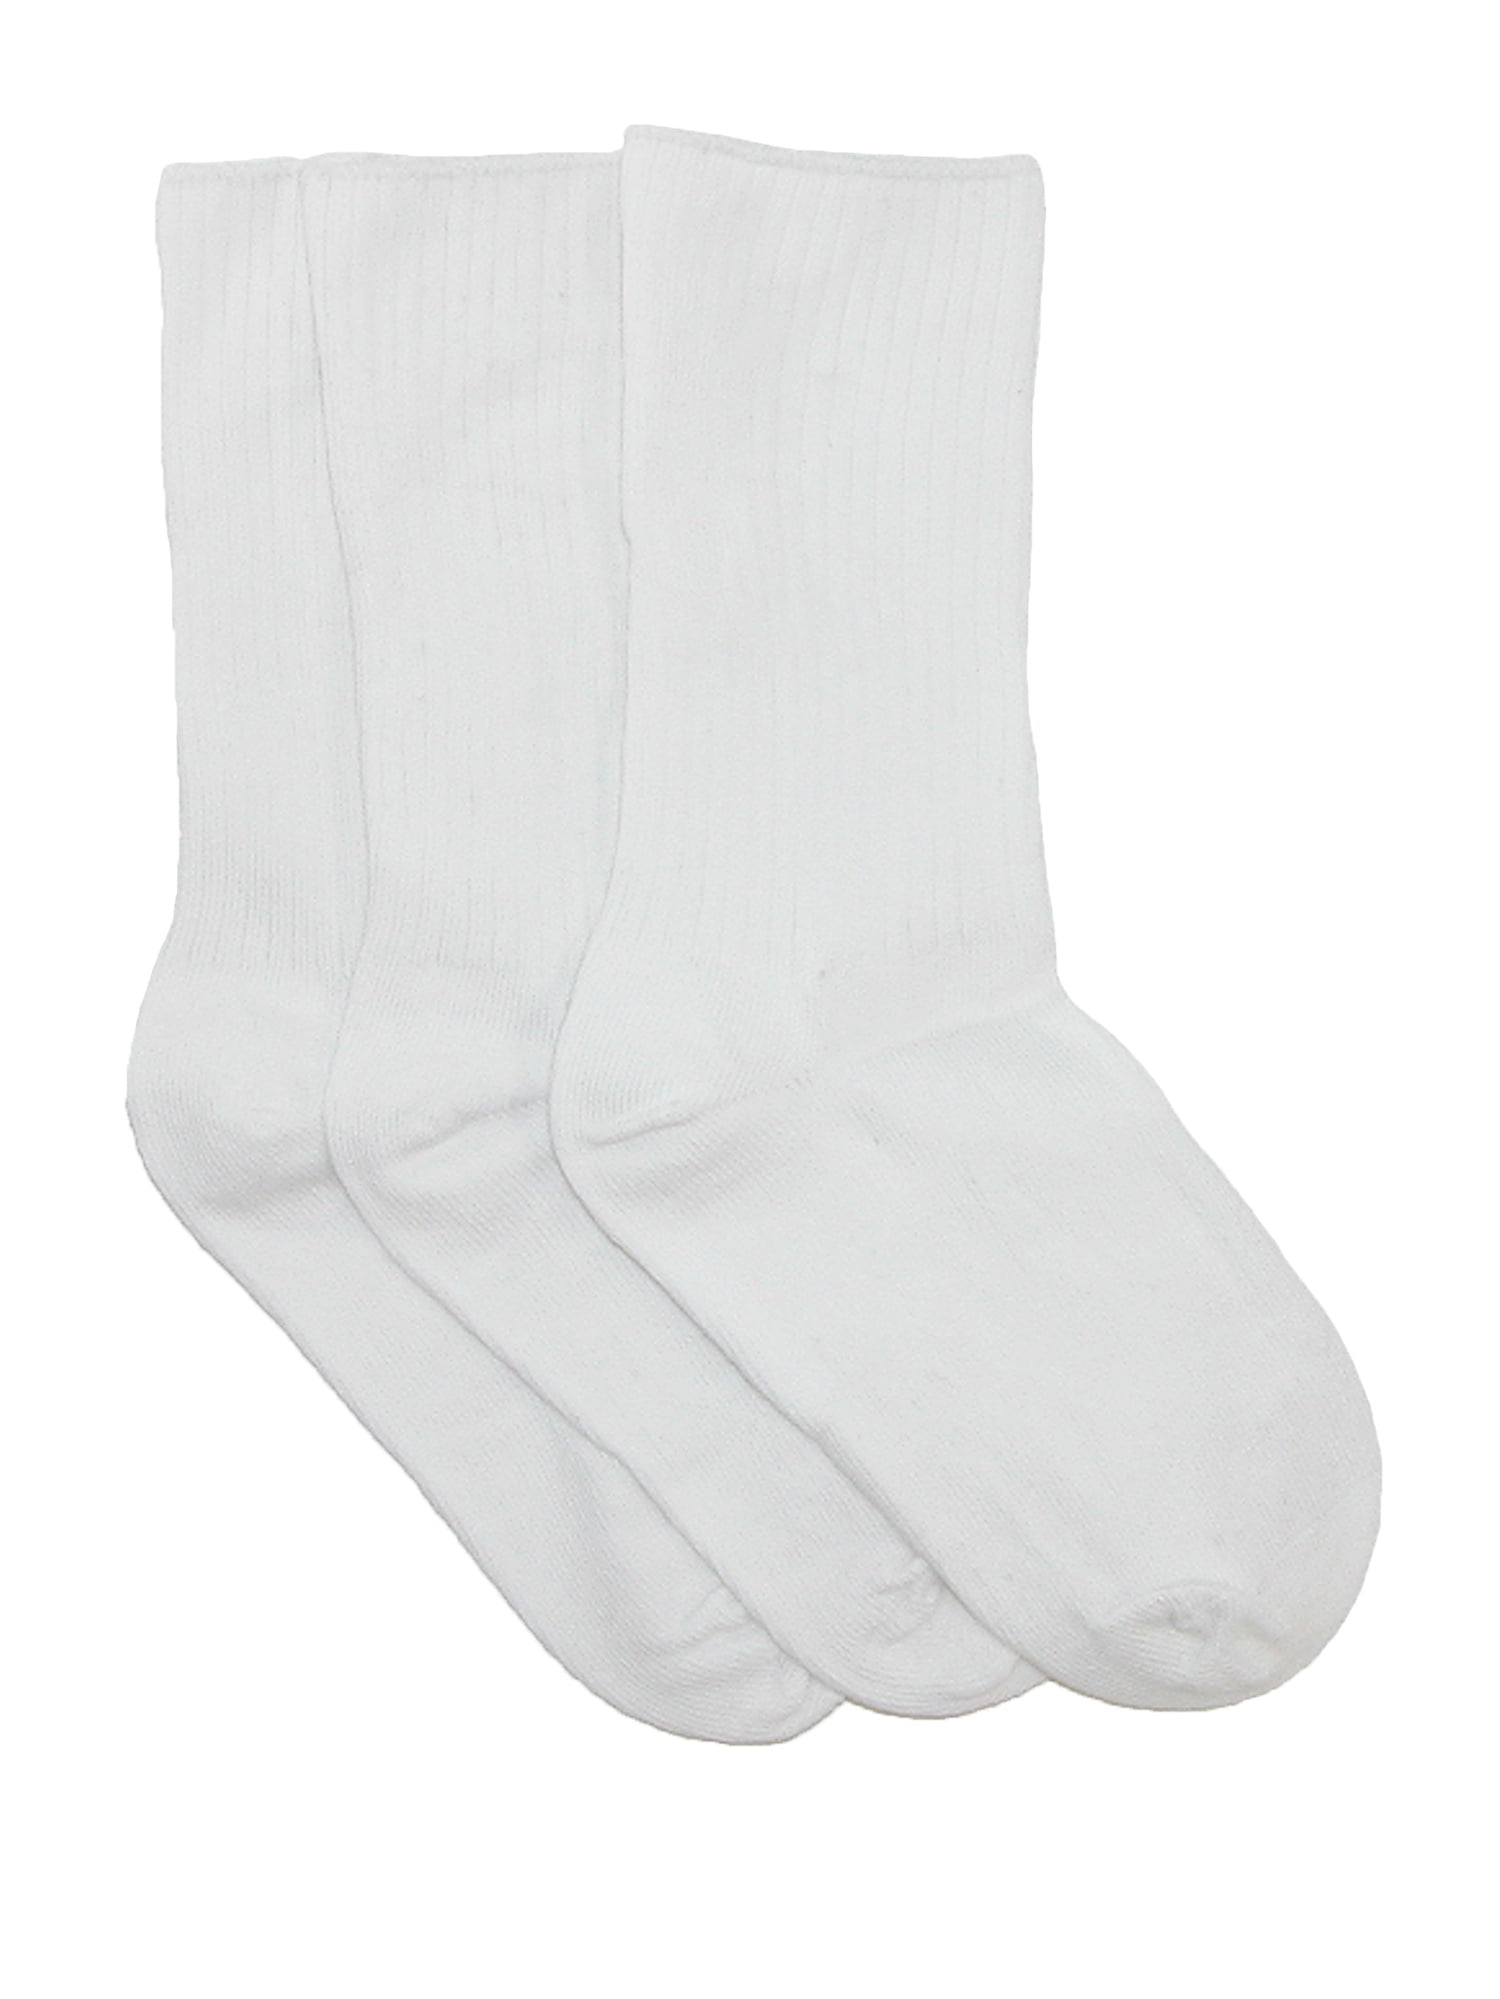 New Jefferies Socks Kids' Cotton Seamless Toe Casual Crew Sock Pack of 3 